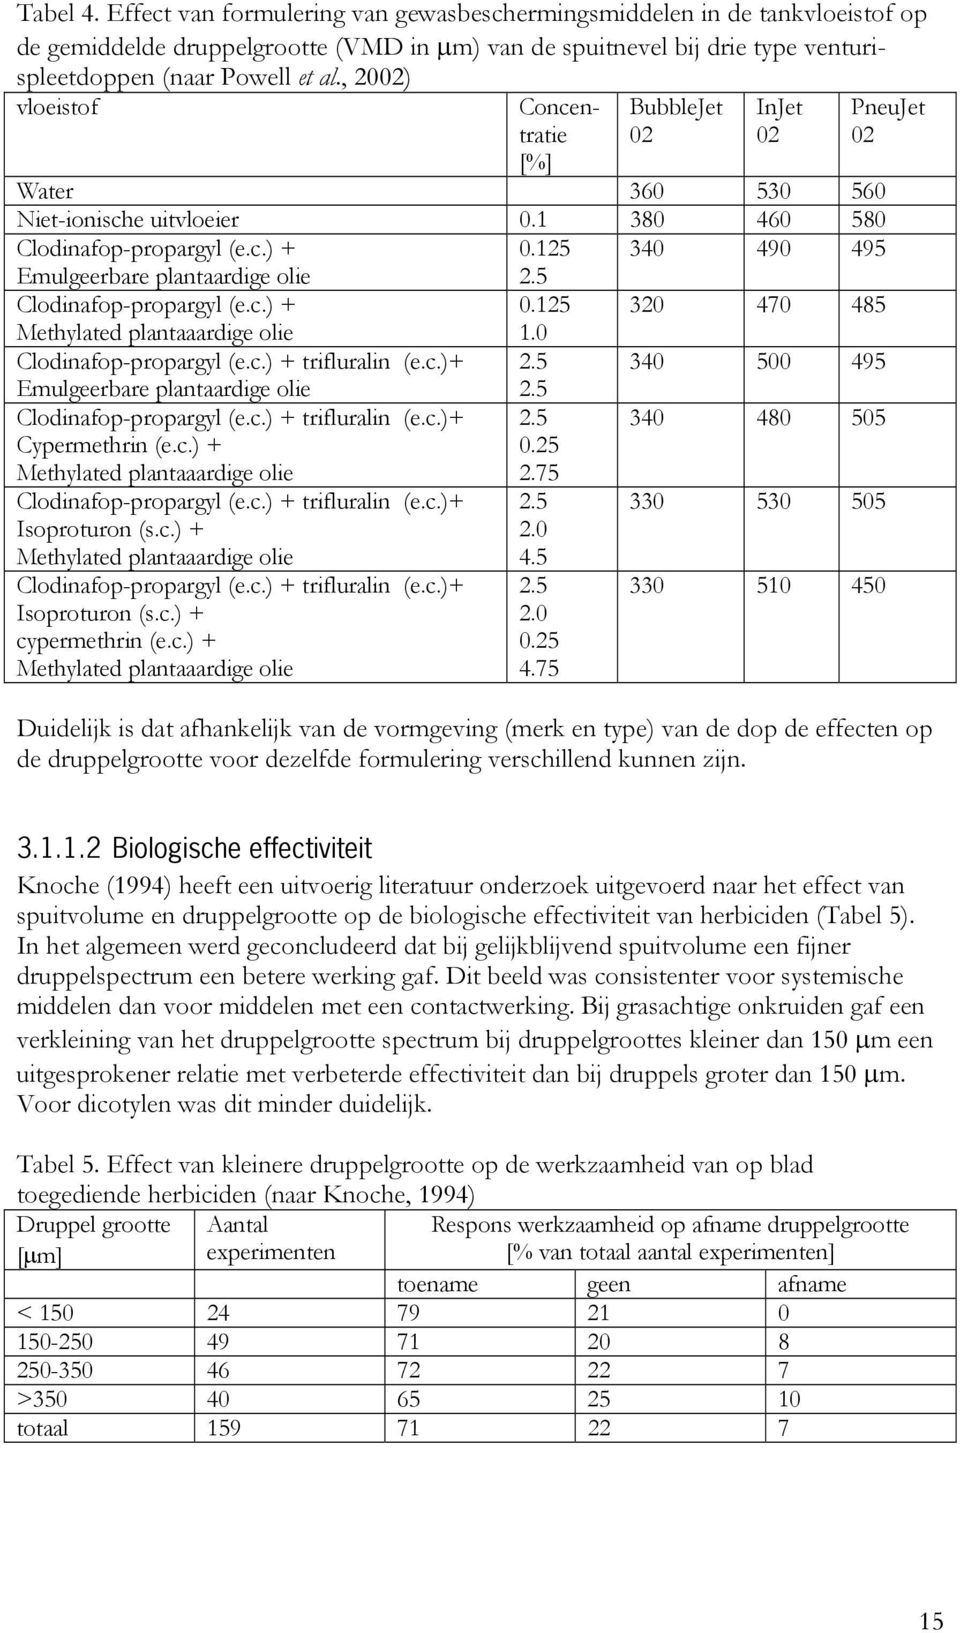 125 340 490 495 Emulgeerbare plantaardige olie 2.5 Clodinafop-propargyl (e.c.) + 0.125 320 470 485 Methylated plantaaardige olie 1.0 Clodinafop-propargyl (e.c.) + trifluralin (e.c.)+ 2.